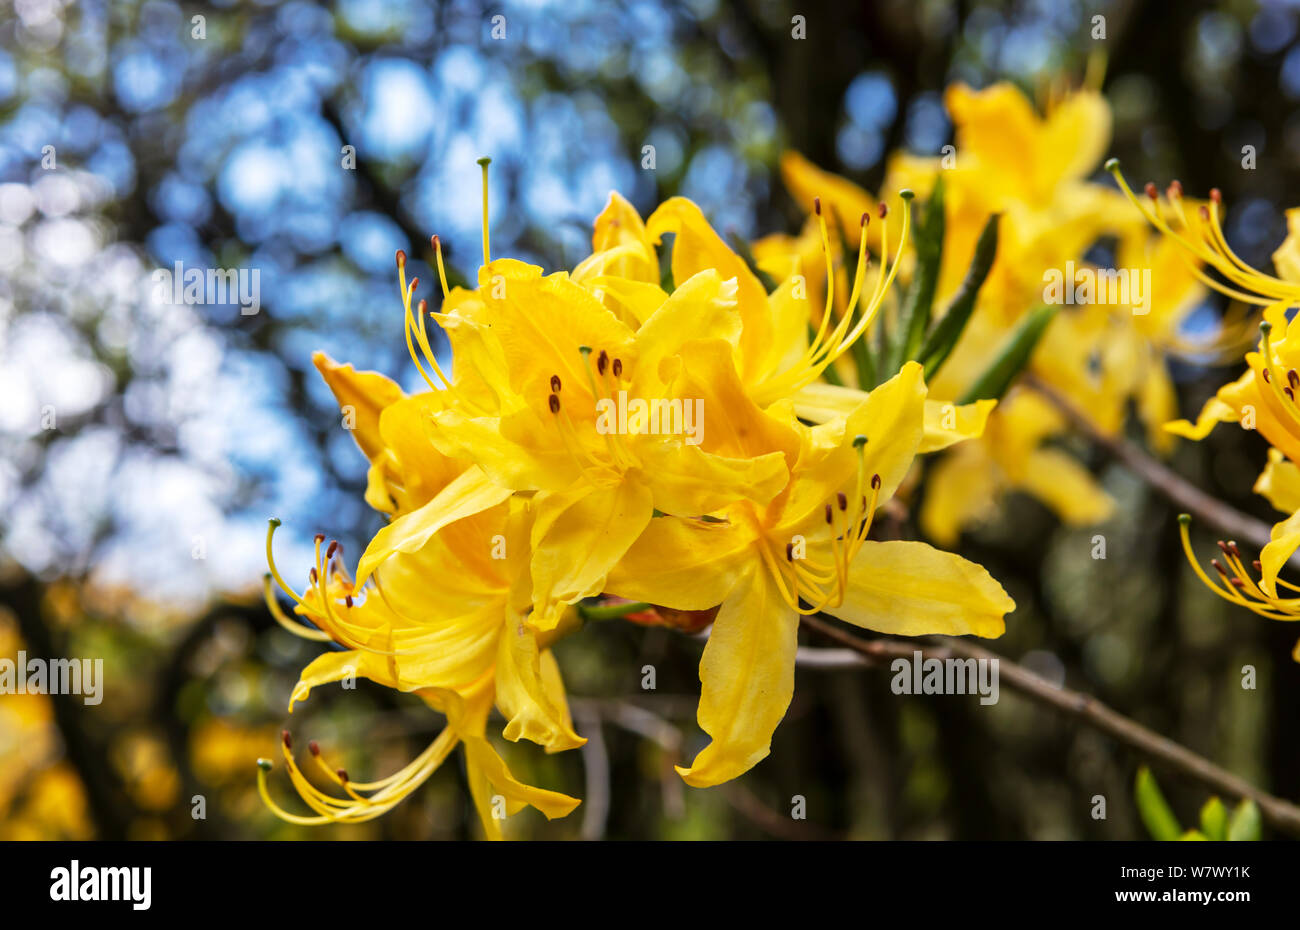 Cluster of golden yellow azalea flowers close-up. Stock Photo